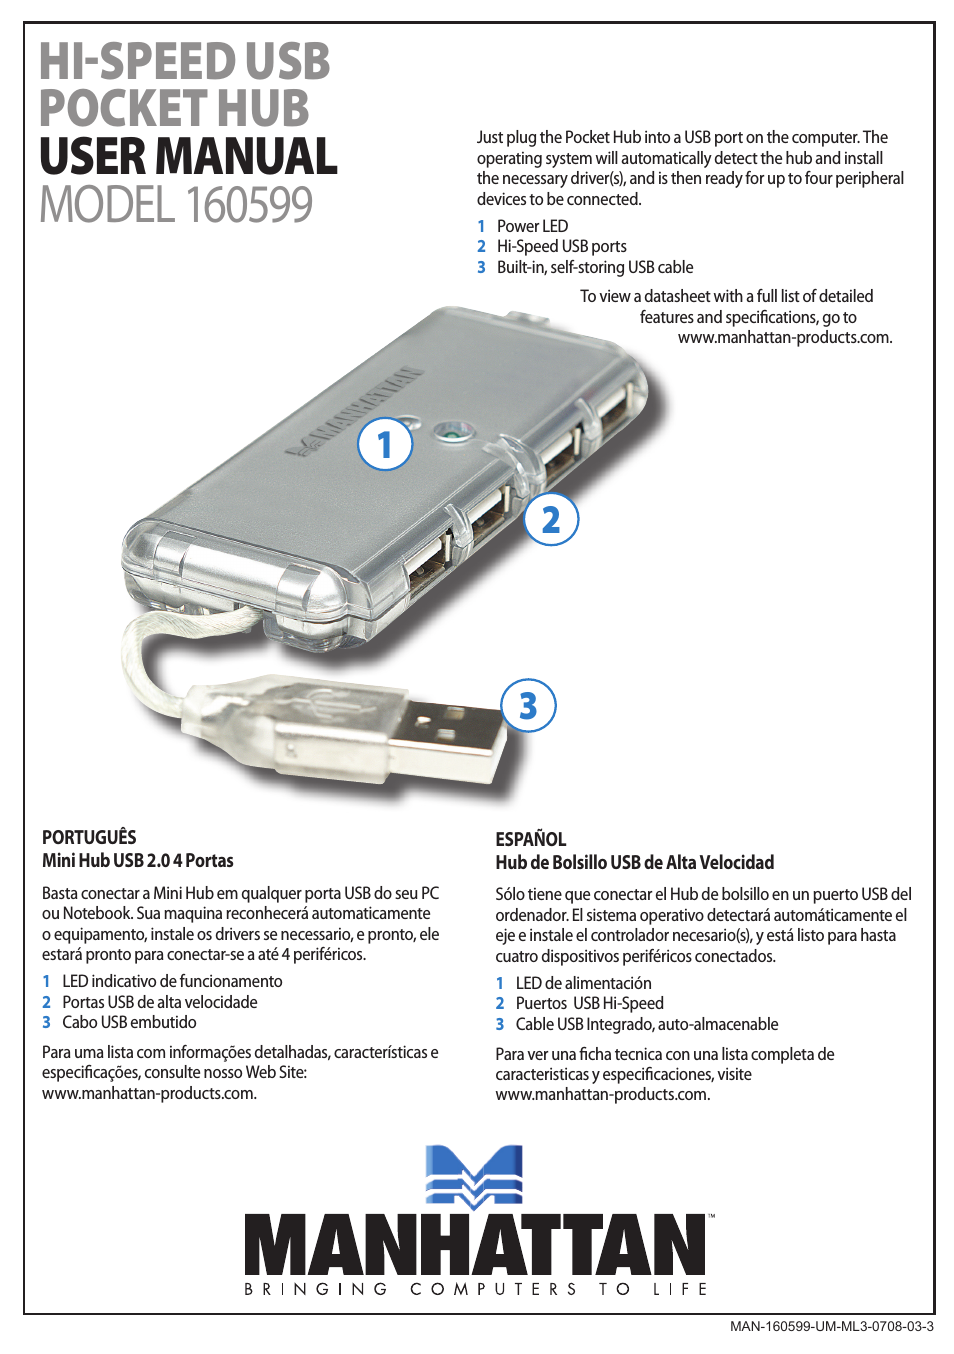 160599 Hi-Speed USB Pocket Hub - Manual